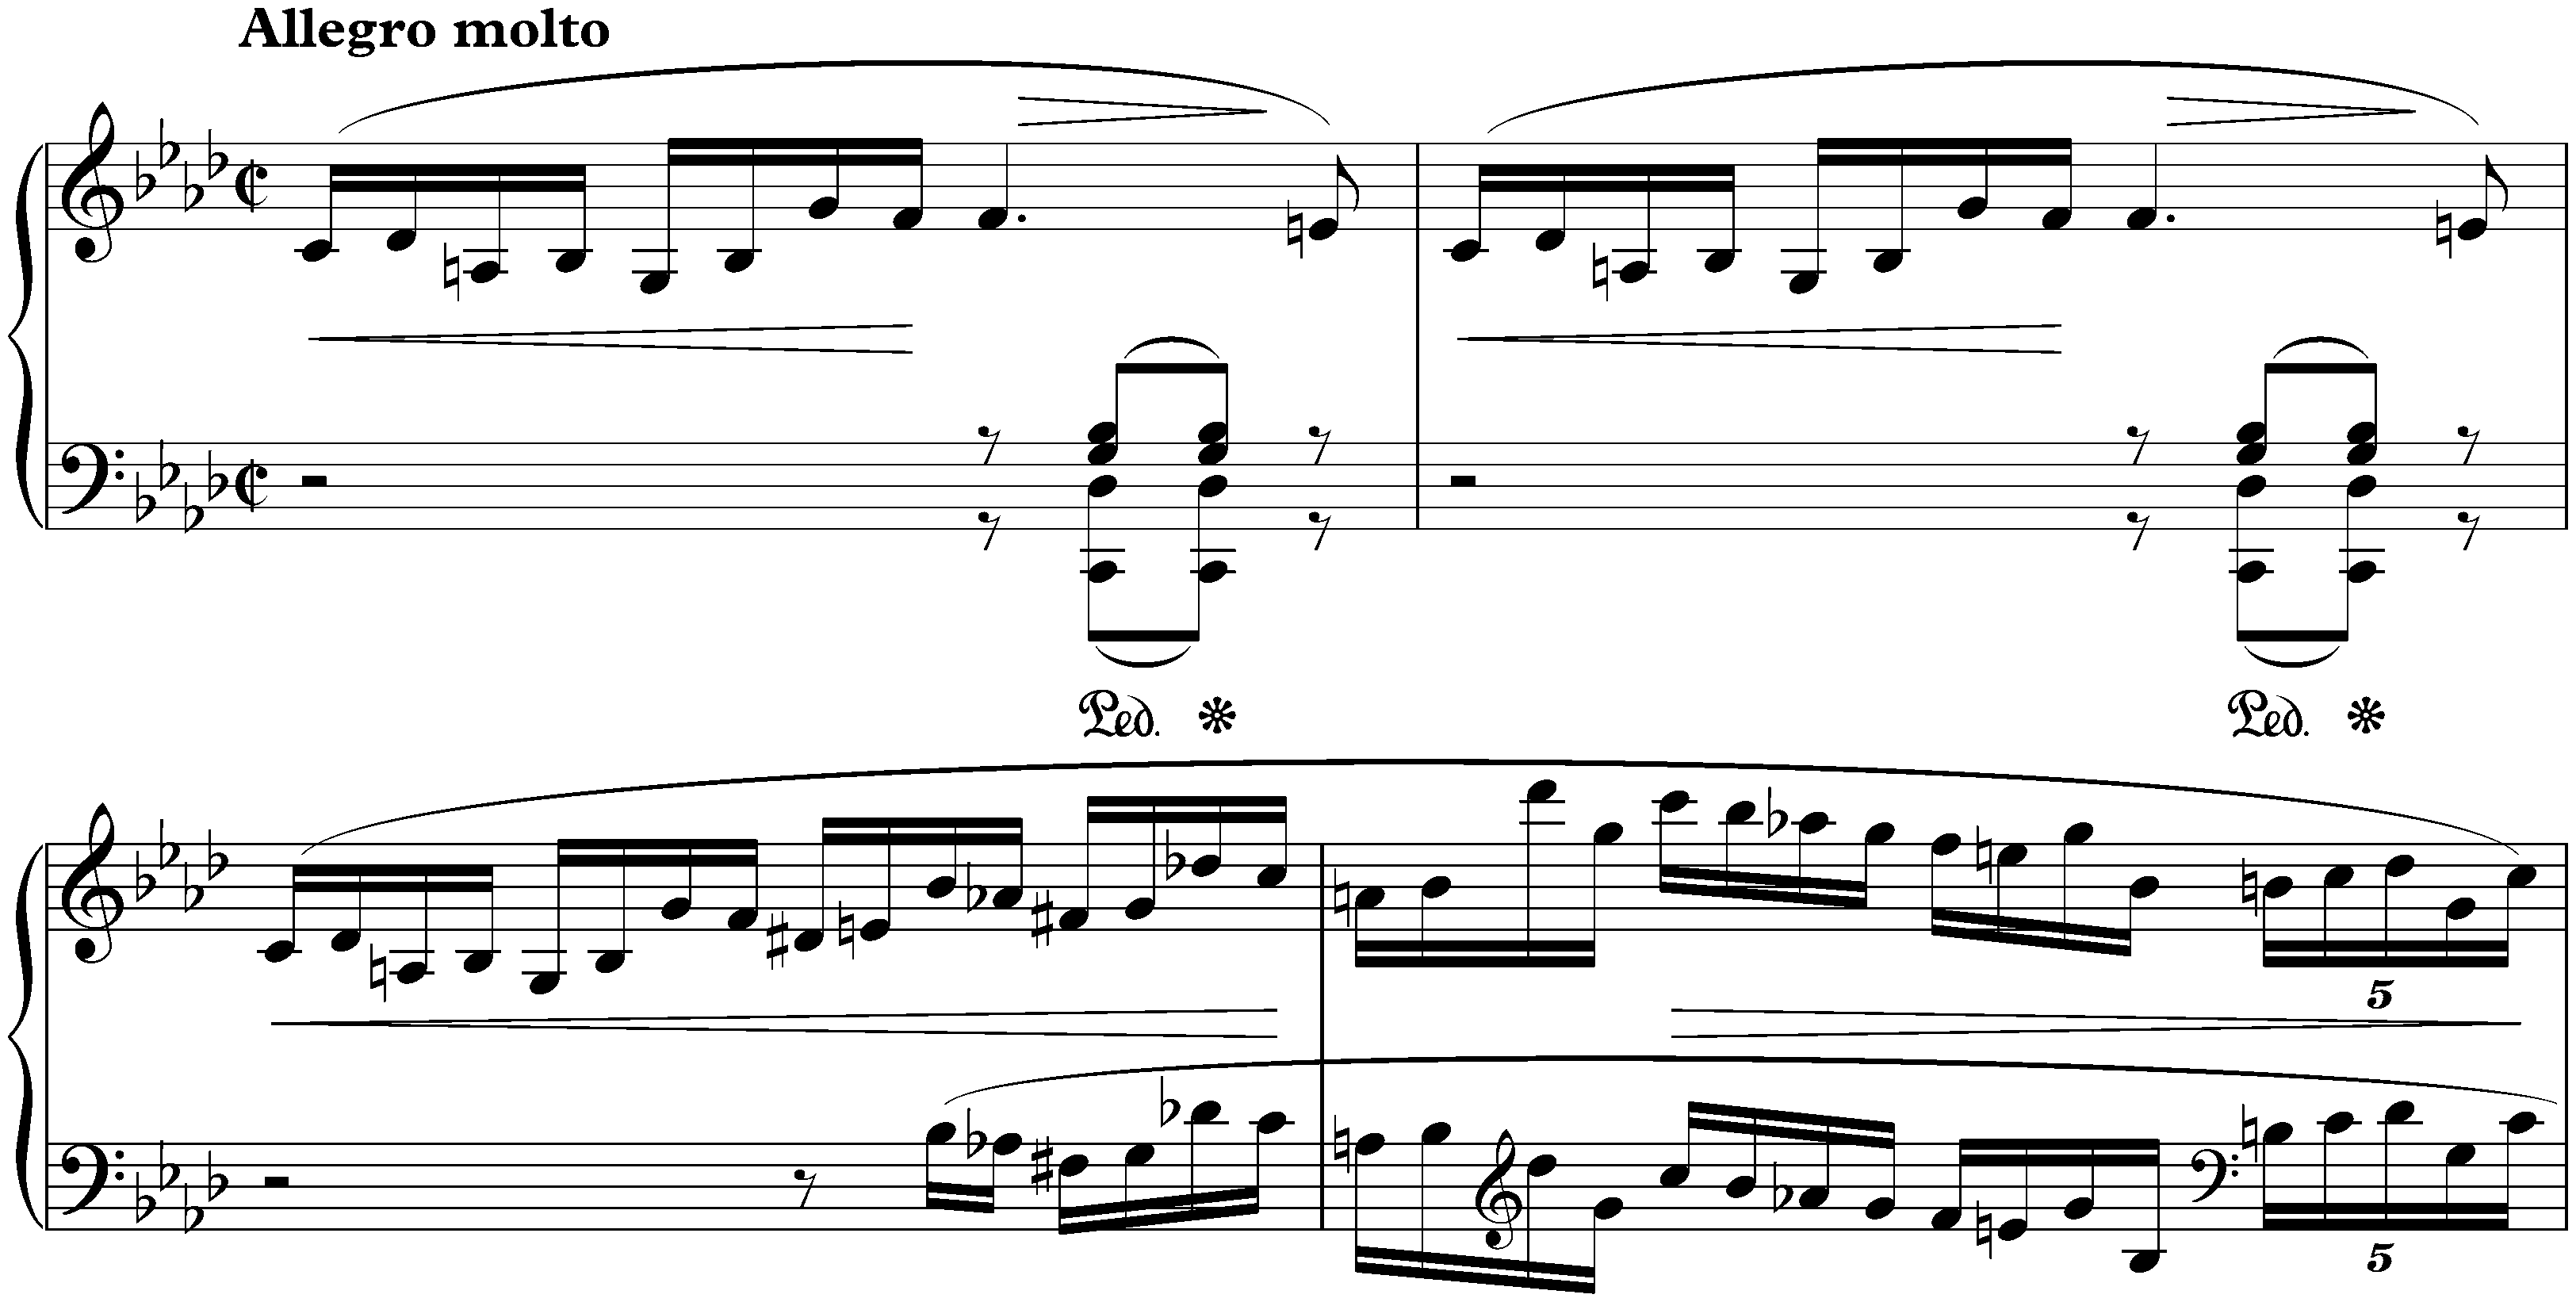 Twenty-four Préludes, op. 28; 18. F minor